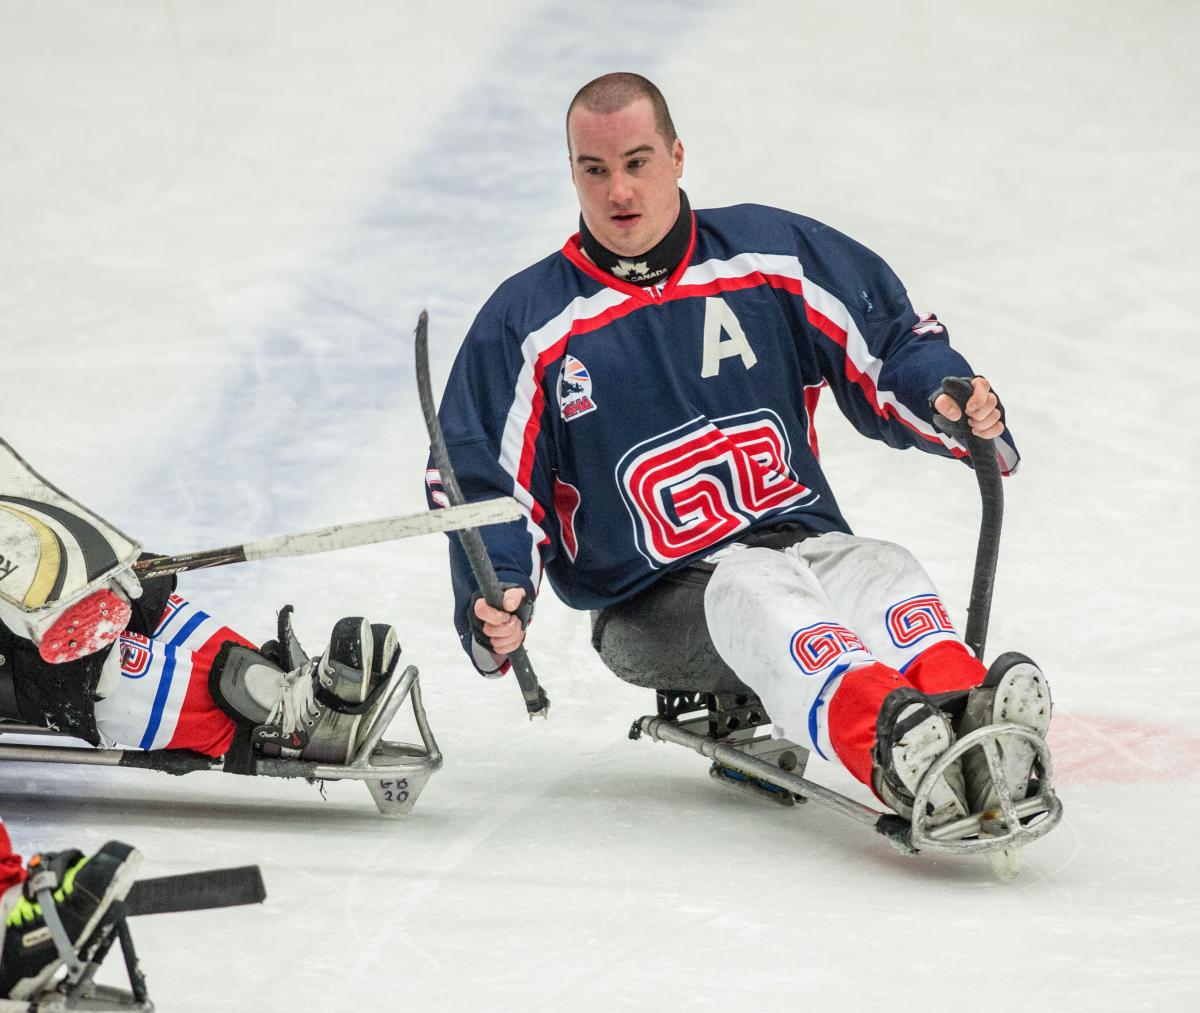 Matt Clarkson of Great Britain at the IPC Ice Sledge Hockey World Championships B-Pool 2015